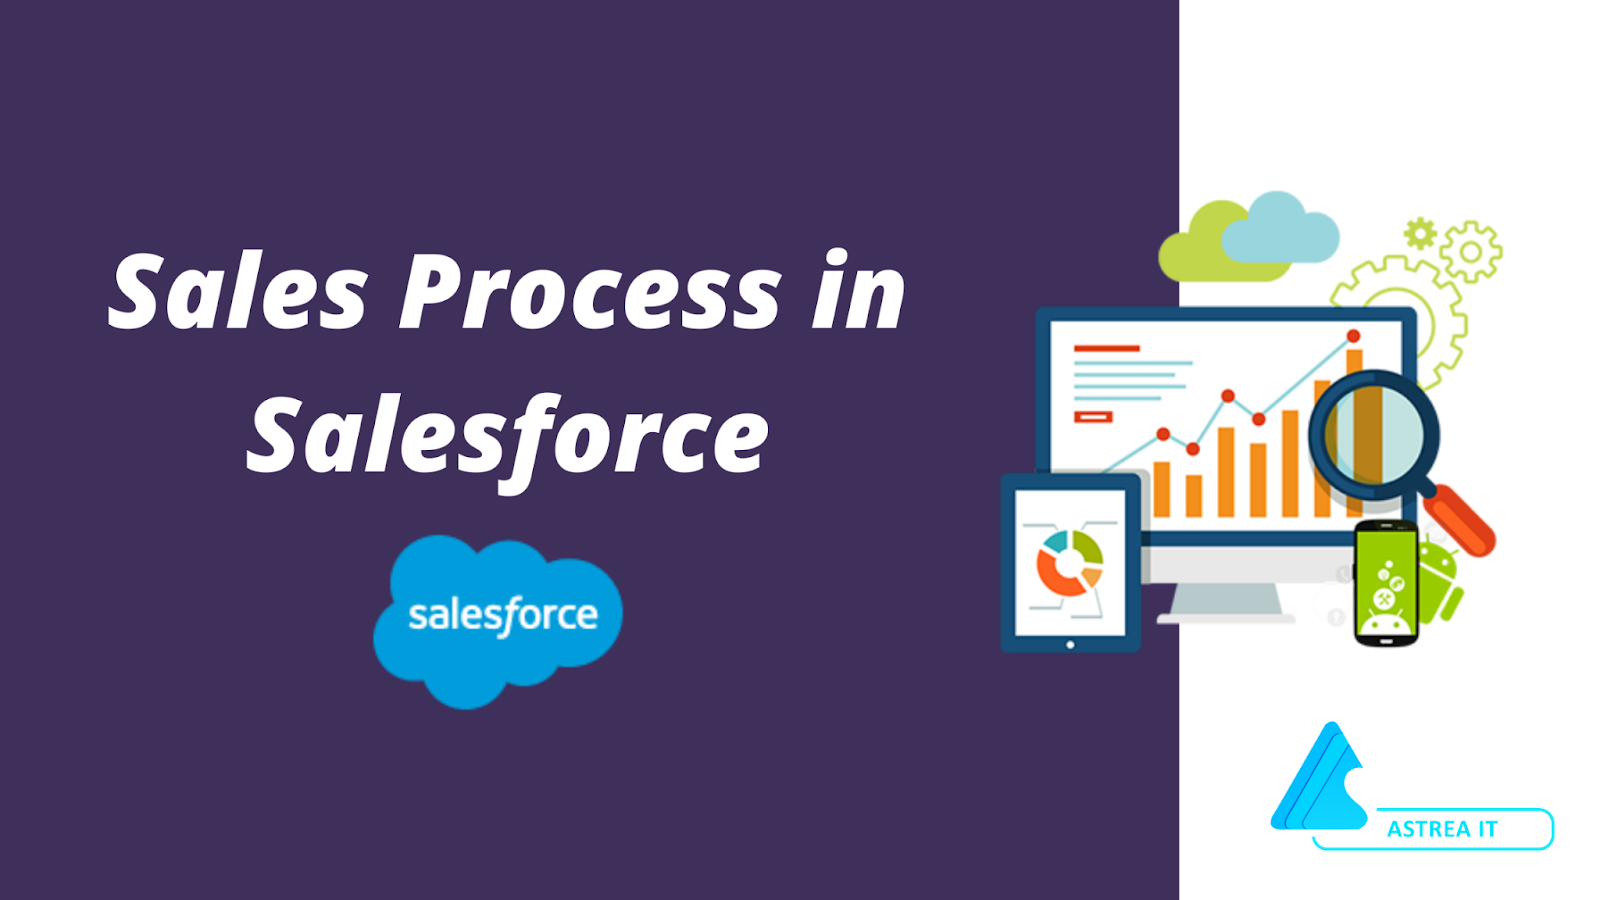 Salesforce Sales Process | Sales Process in Salesforce | Astrea IT Services